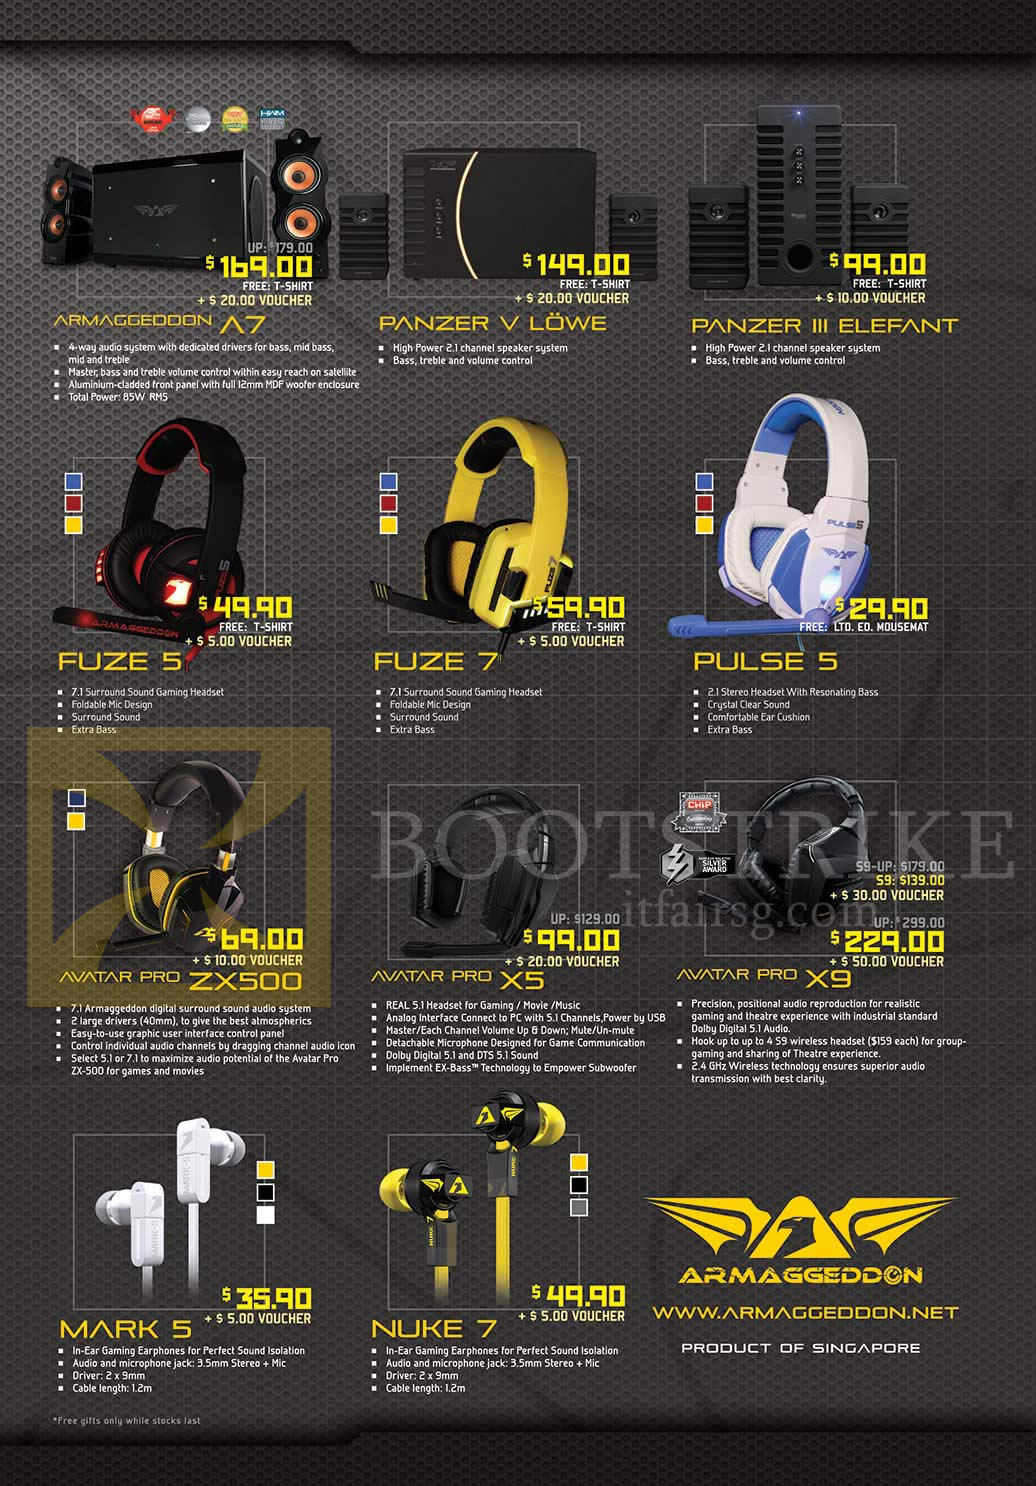 IT SHOW 2015 price list image brochure of Armaggeddon Speakers, Headphones, Earphone, A7, Panzer V Lowe, III Elefant, Fuze 5, 7, Pulse 5, Avatar Pro ZX500, X5, X9, Mark 5, Nuke 7